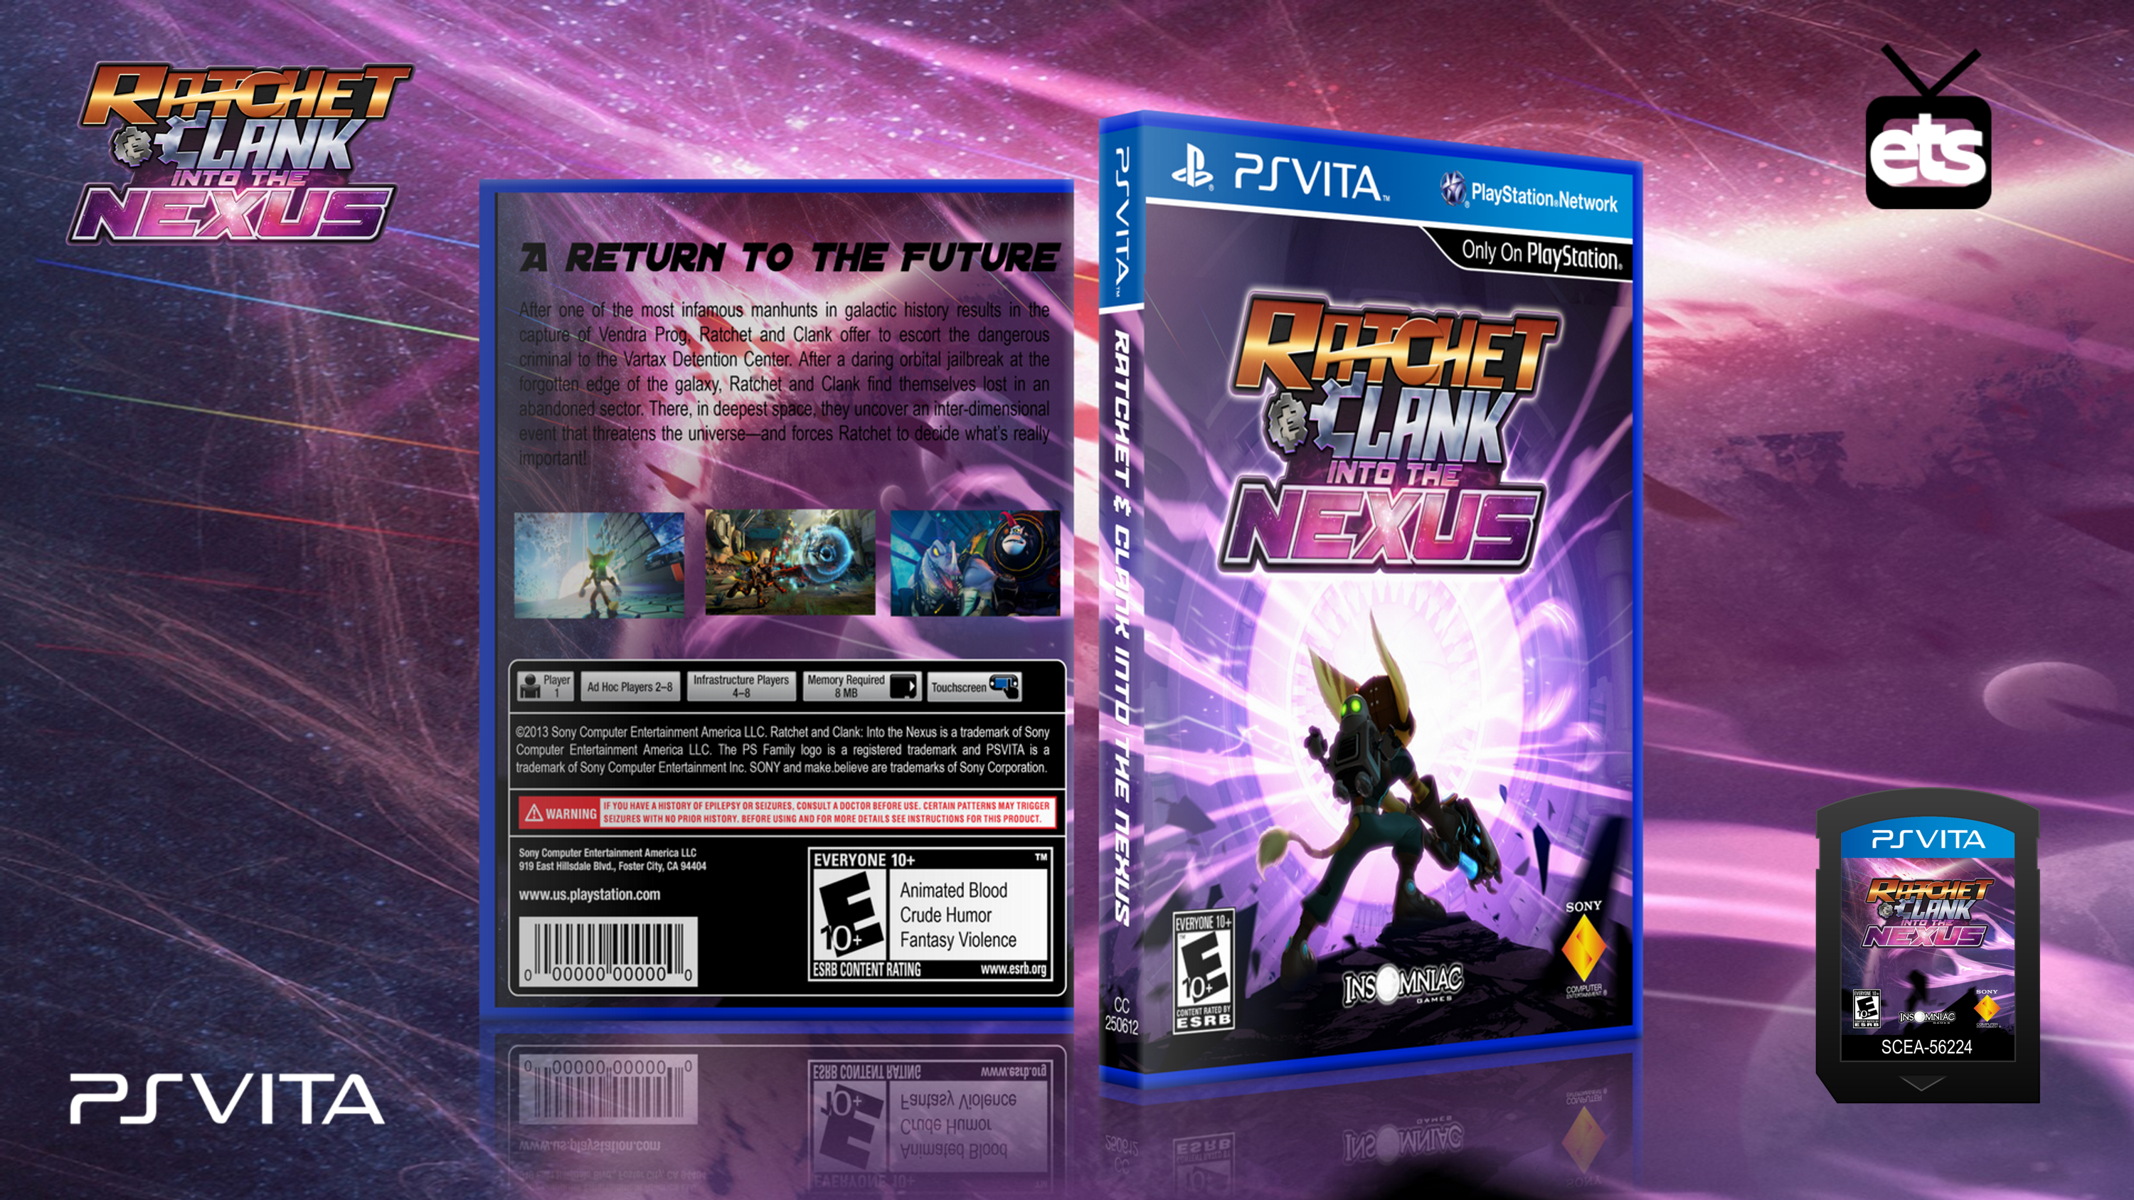 Ratchet & Clank: Into The Nexus box cover